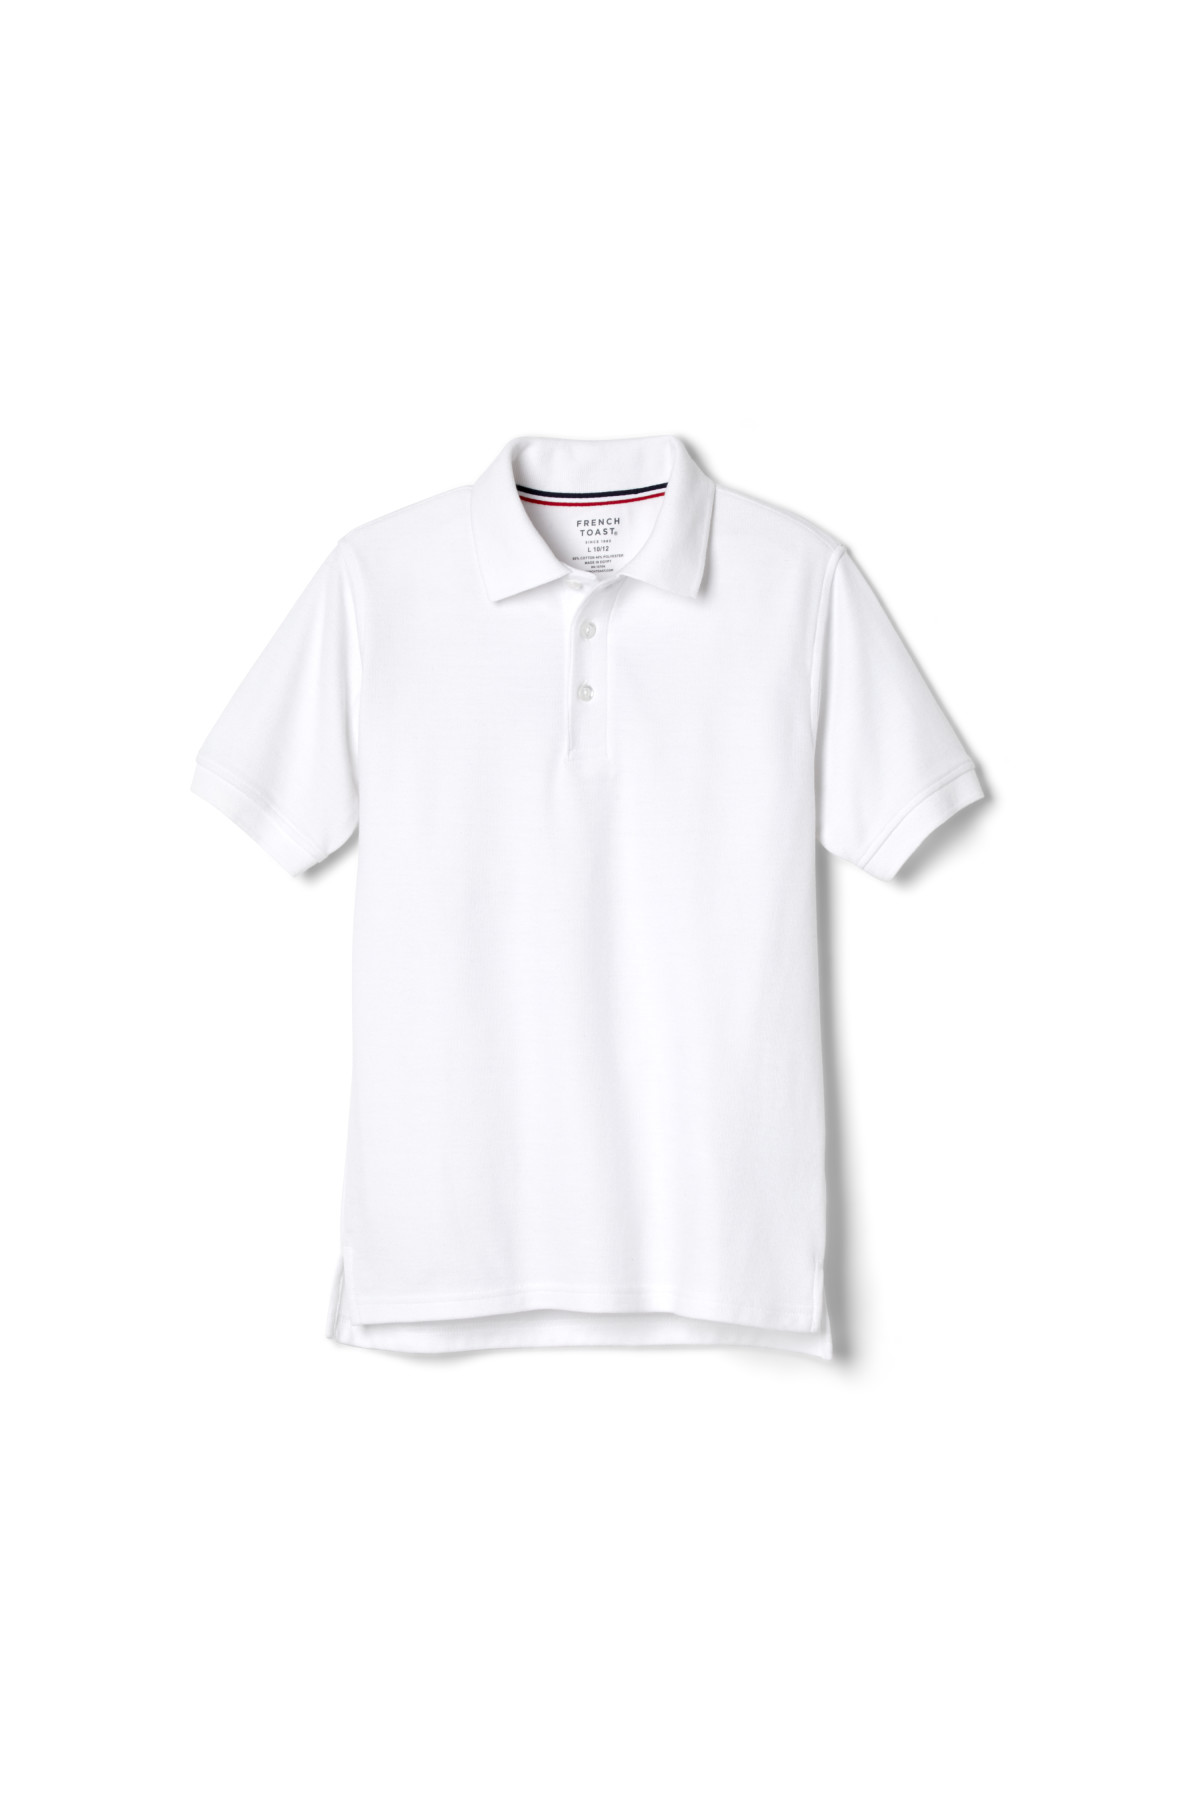 French Toast boys Short Sleeve Pique Polo Shirt Original 